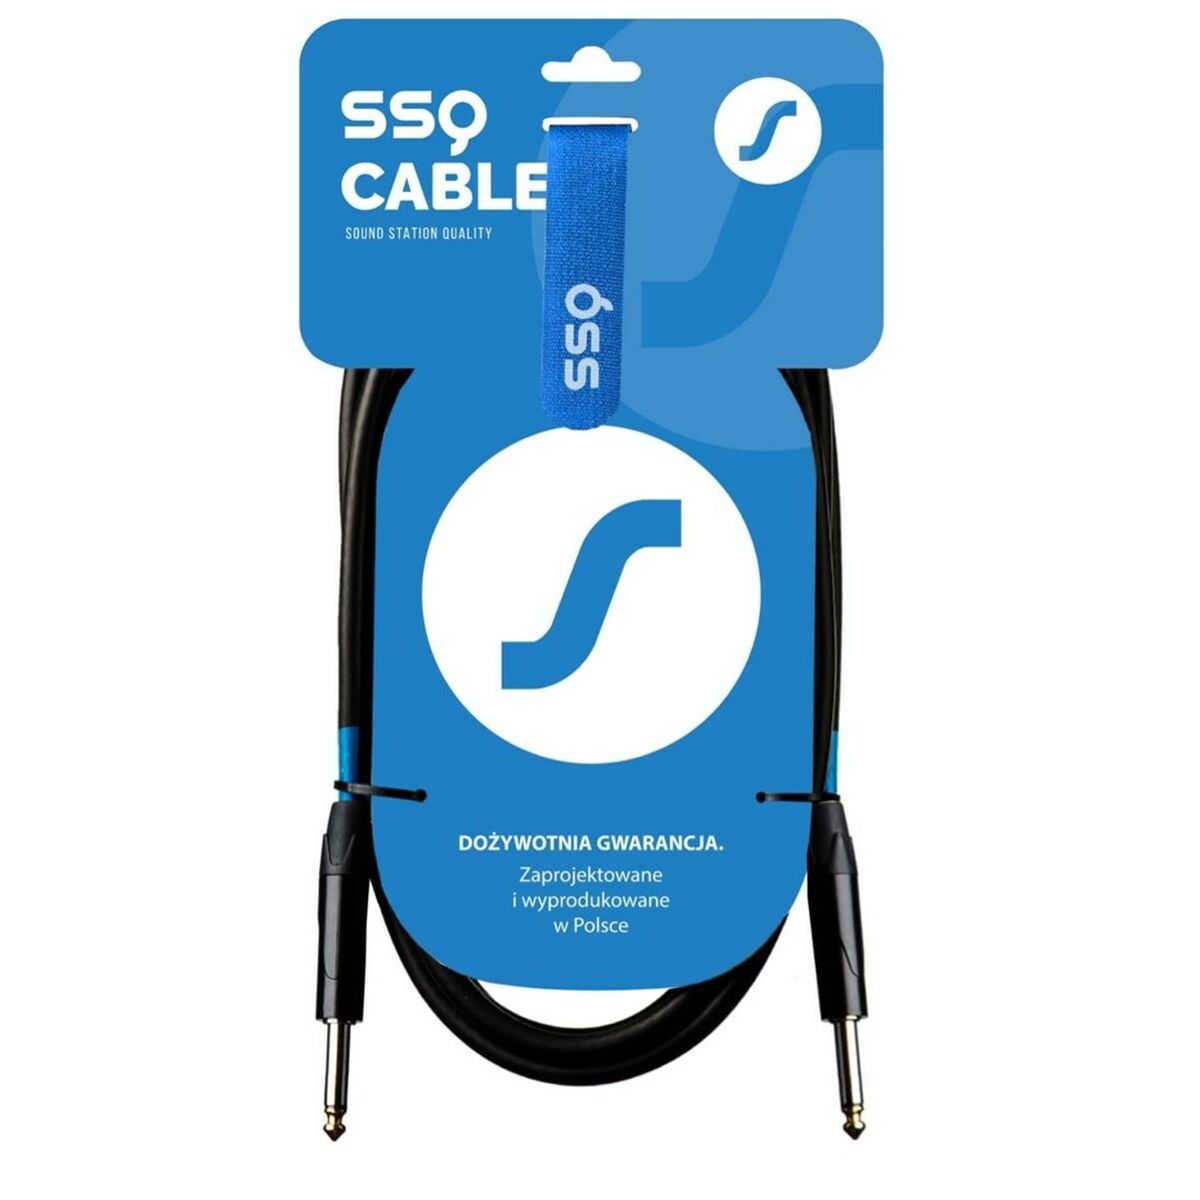 Câble jack Sound station quality (SSQ) SS-1449 5 m